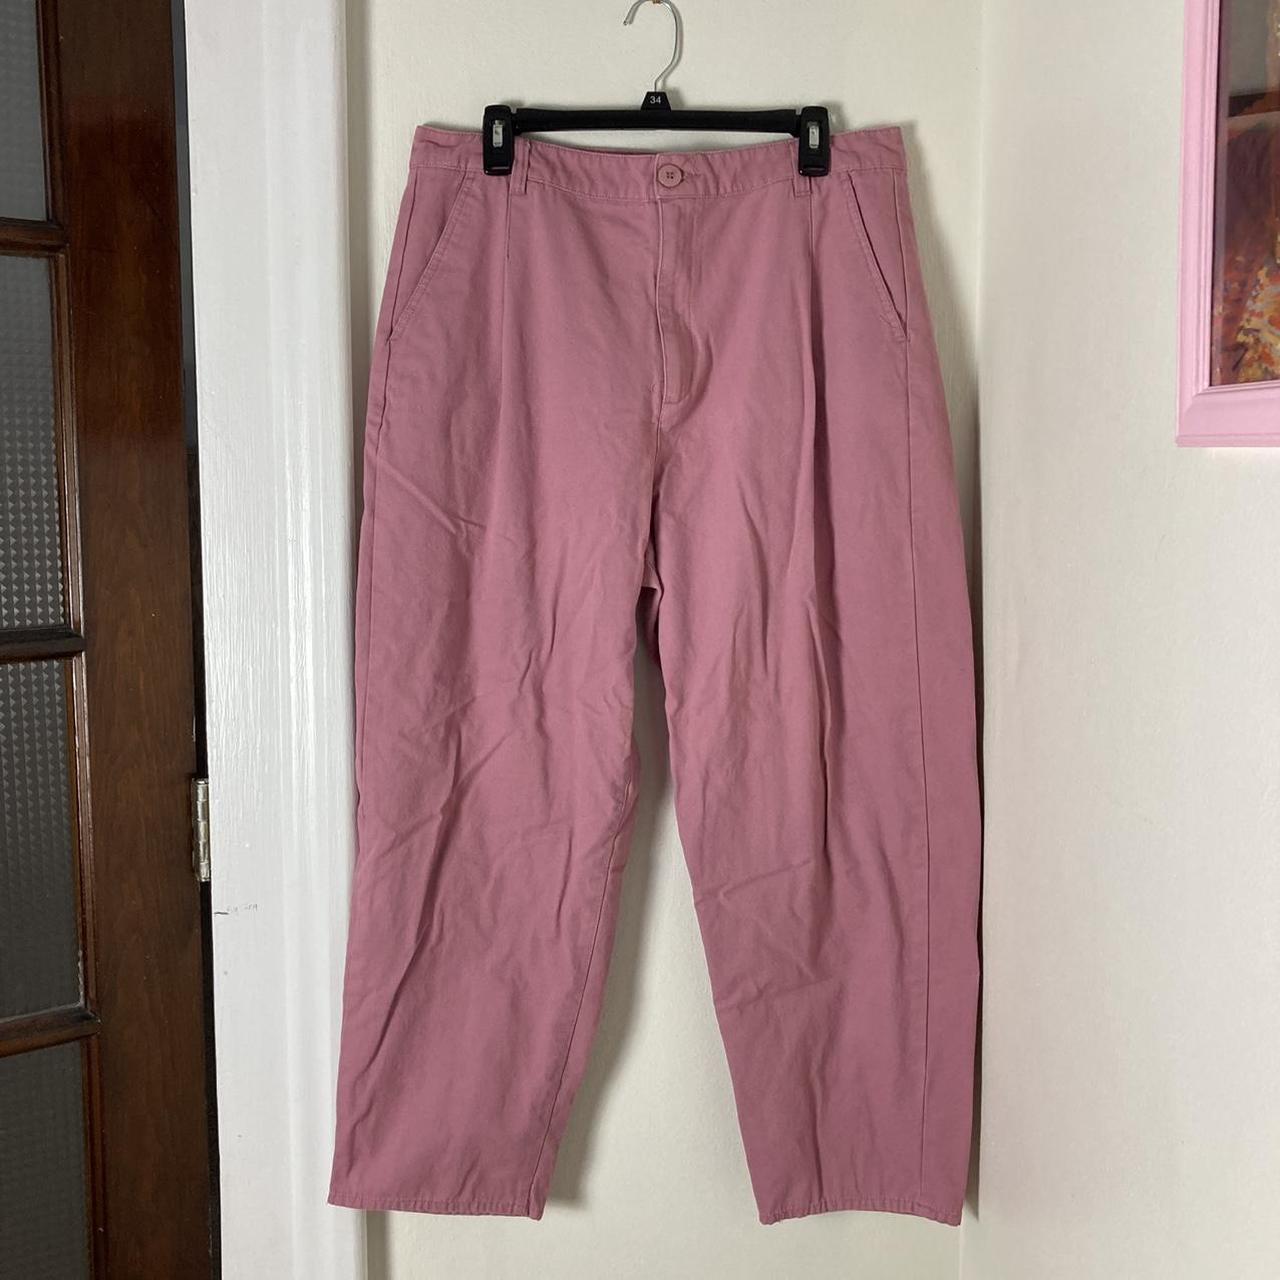 Bright Mauve Pink High Waisted Pants from Princess... - Depop